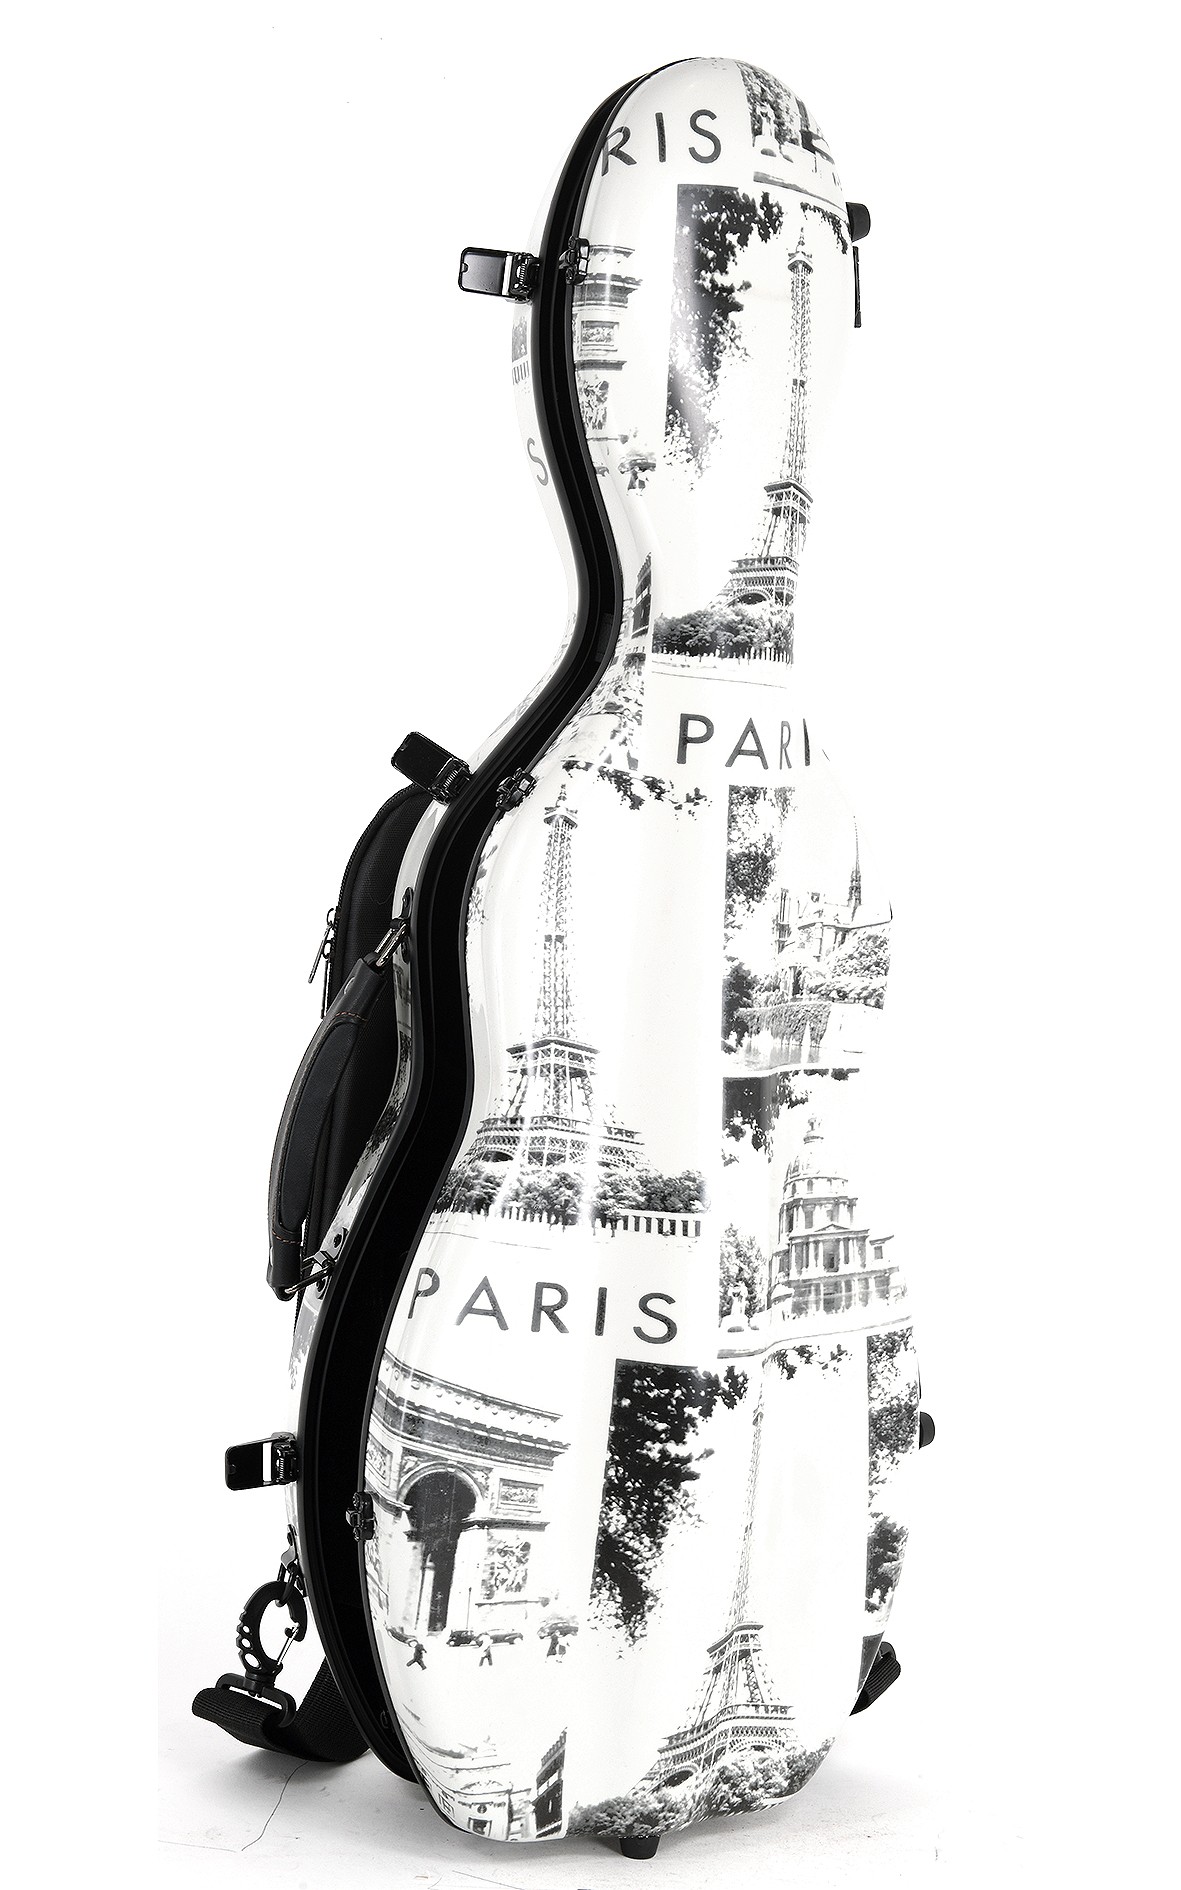 3/4 violin case "Paris"